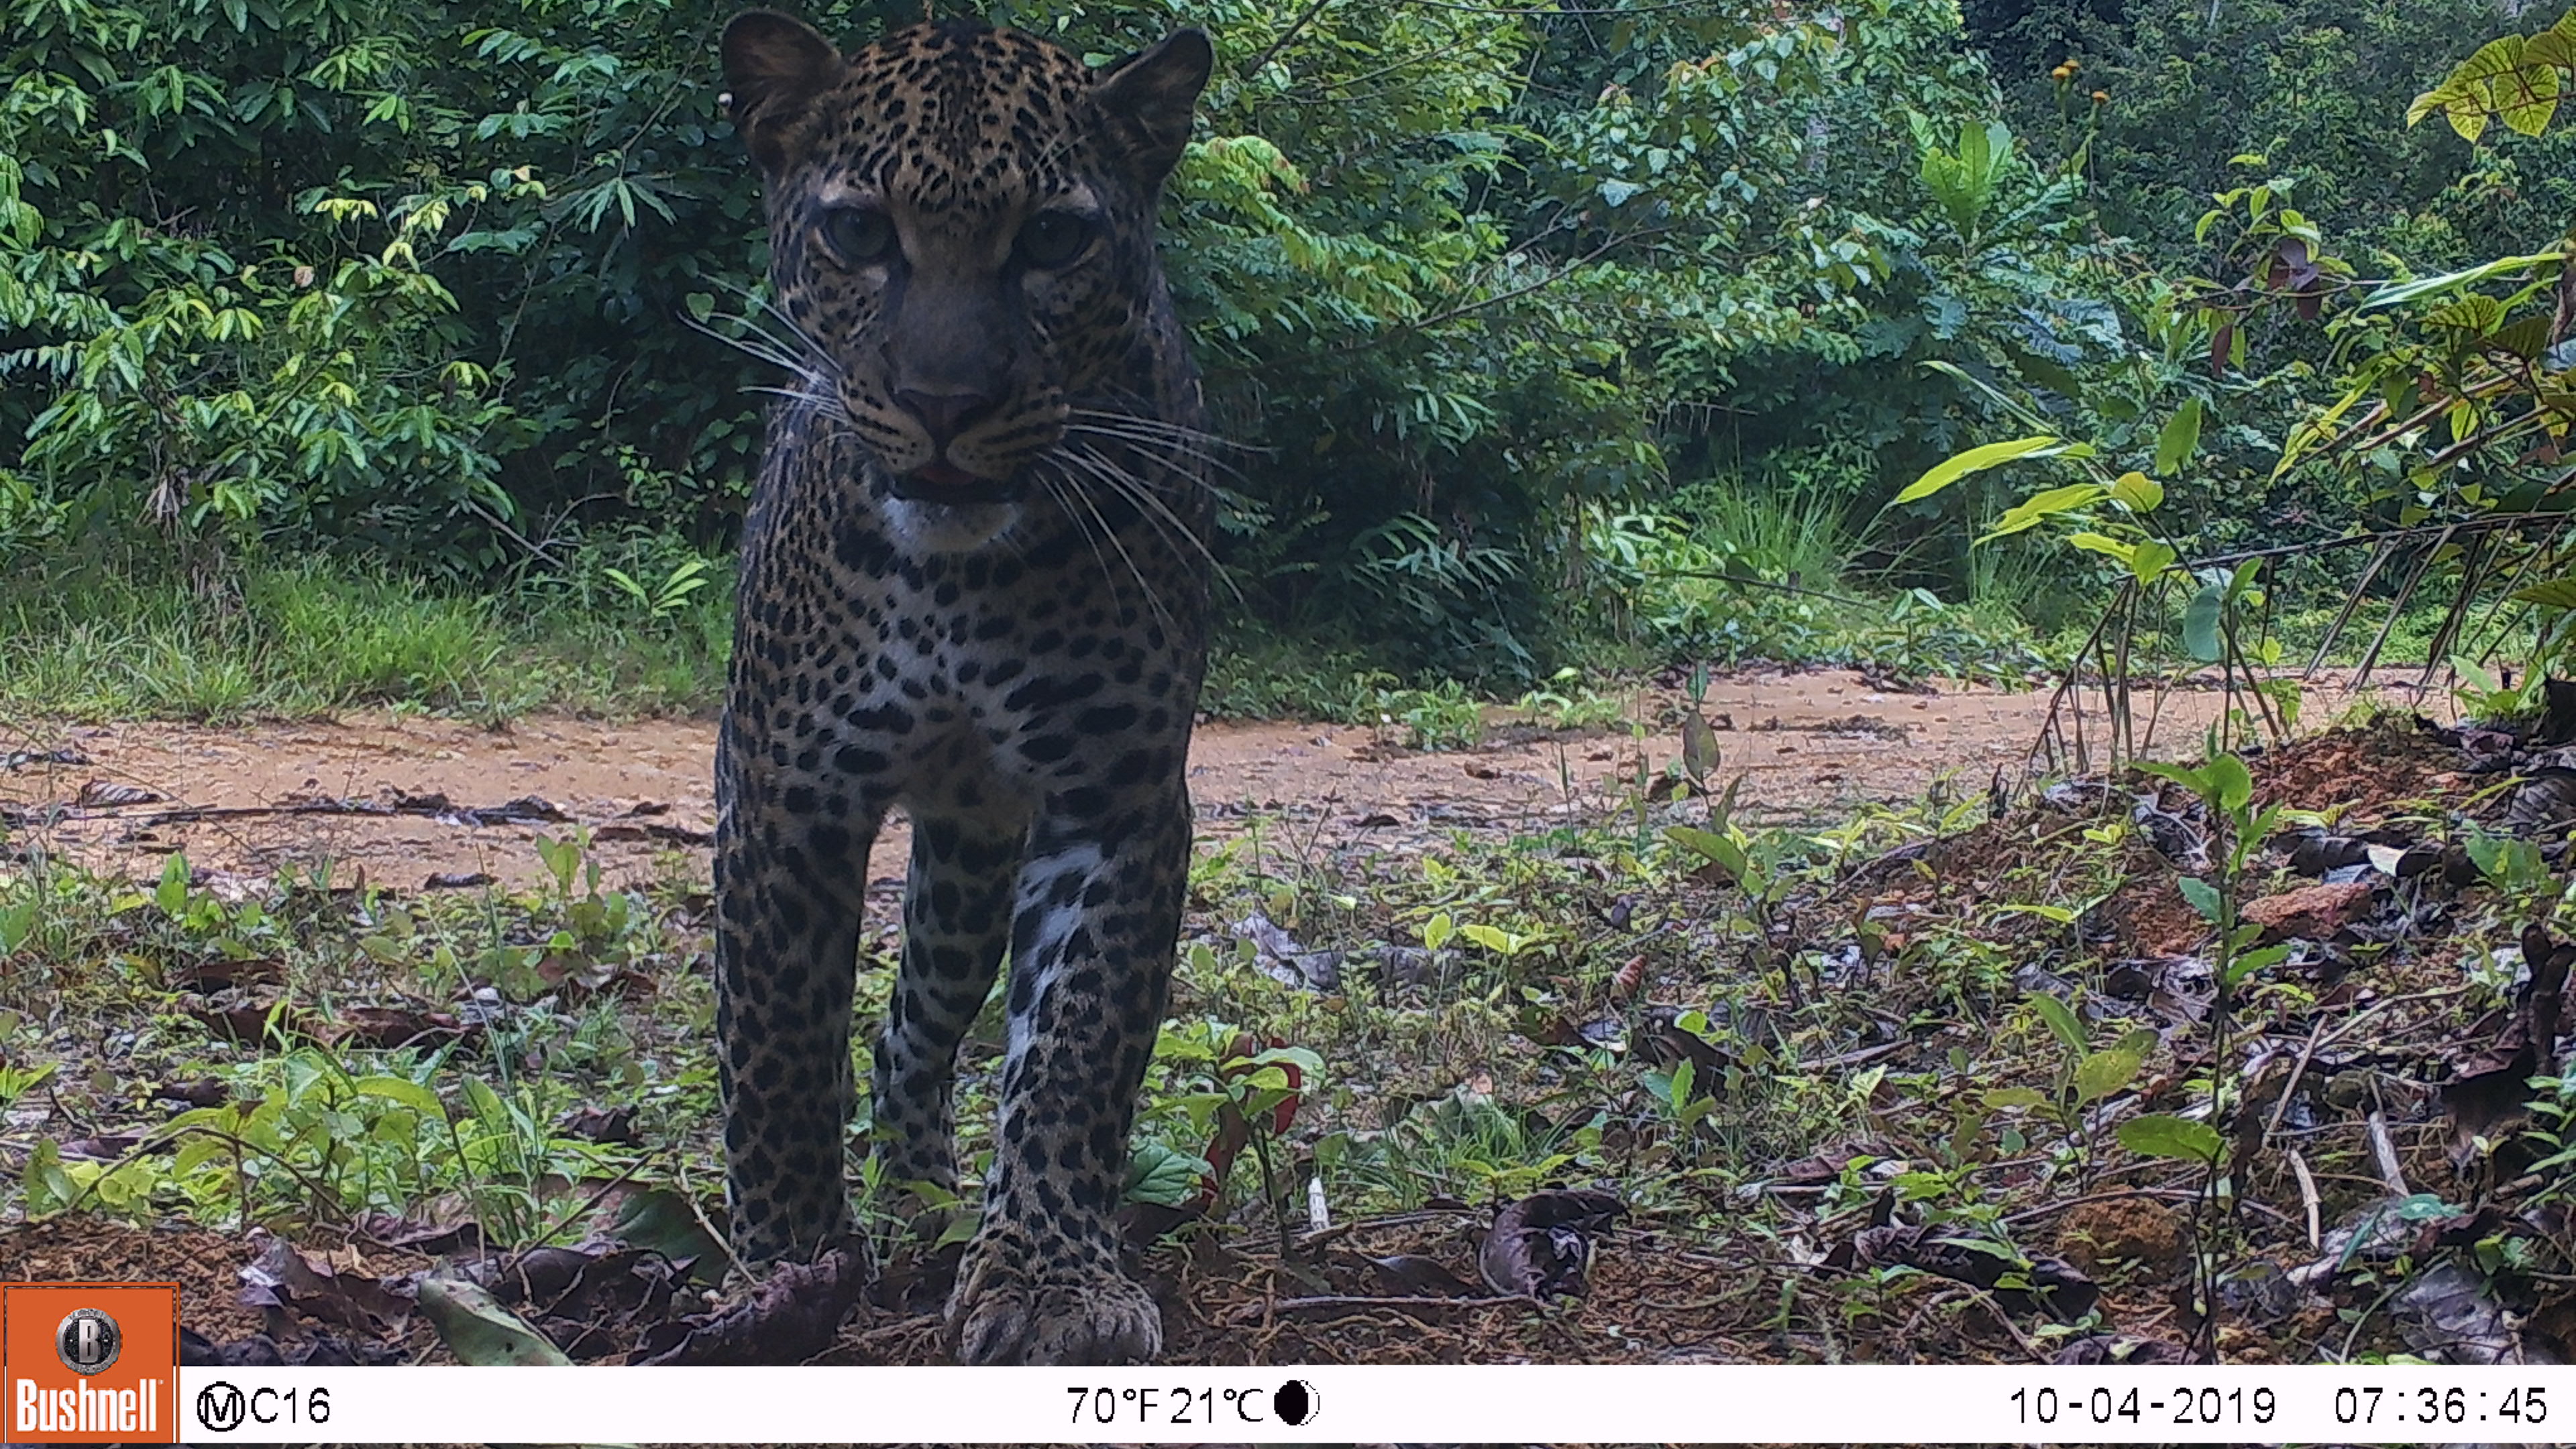 leopard image on camera trap